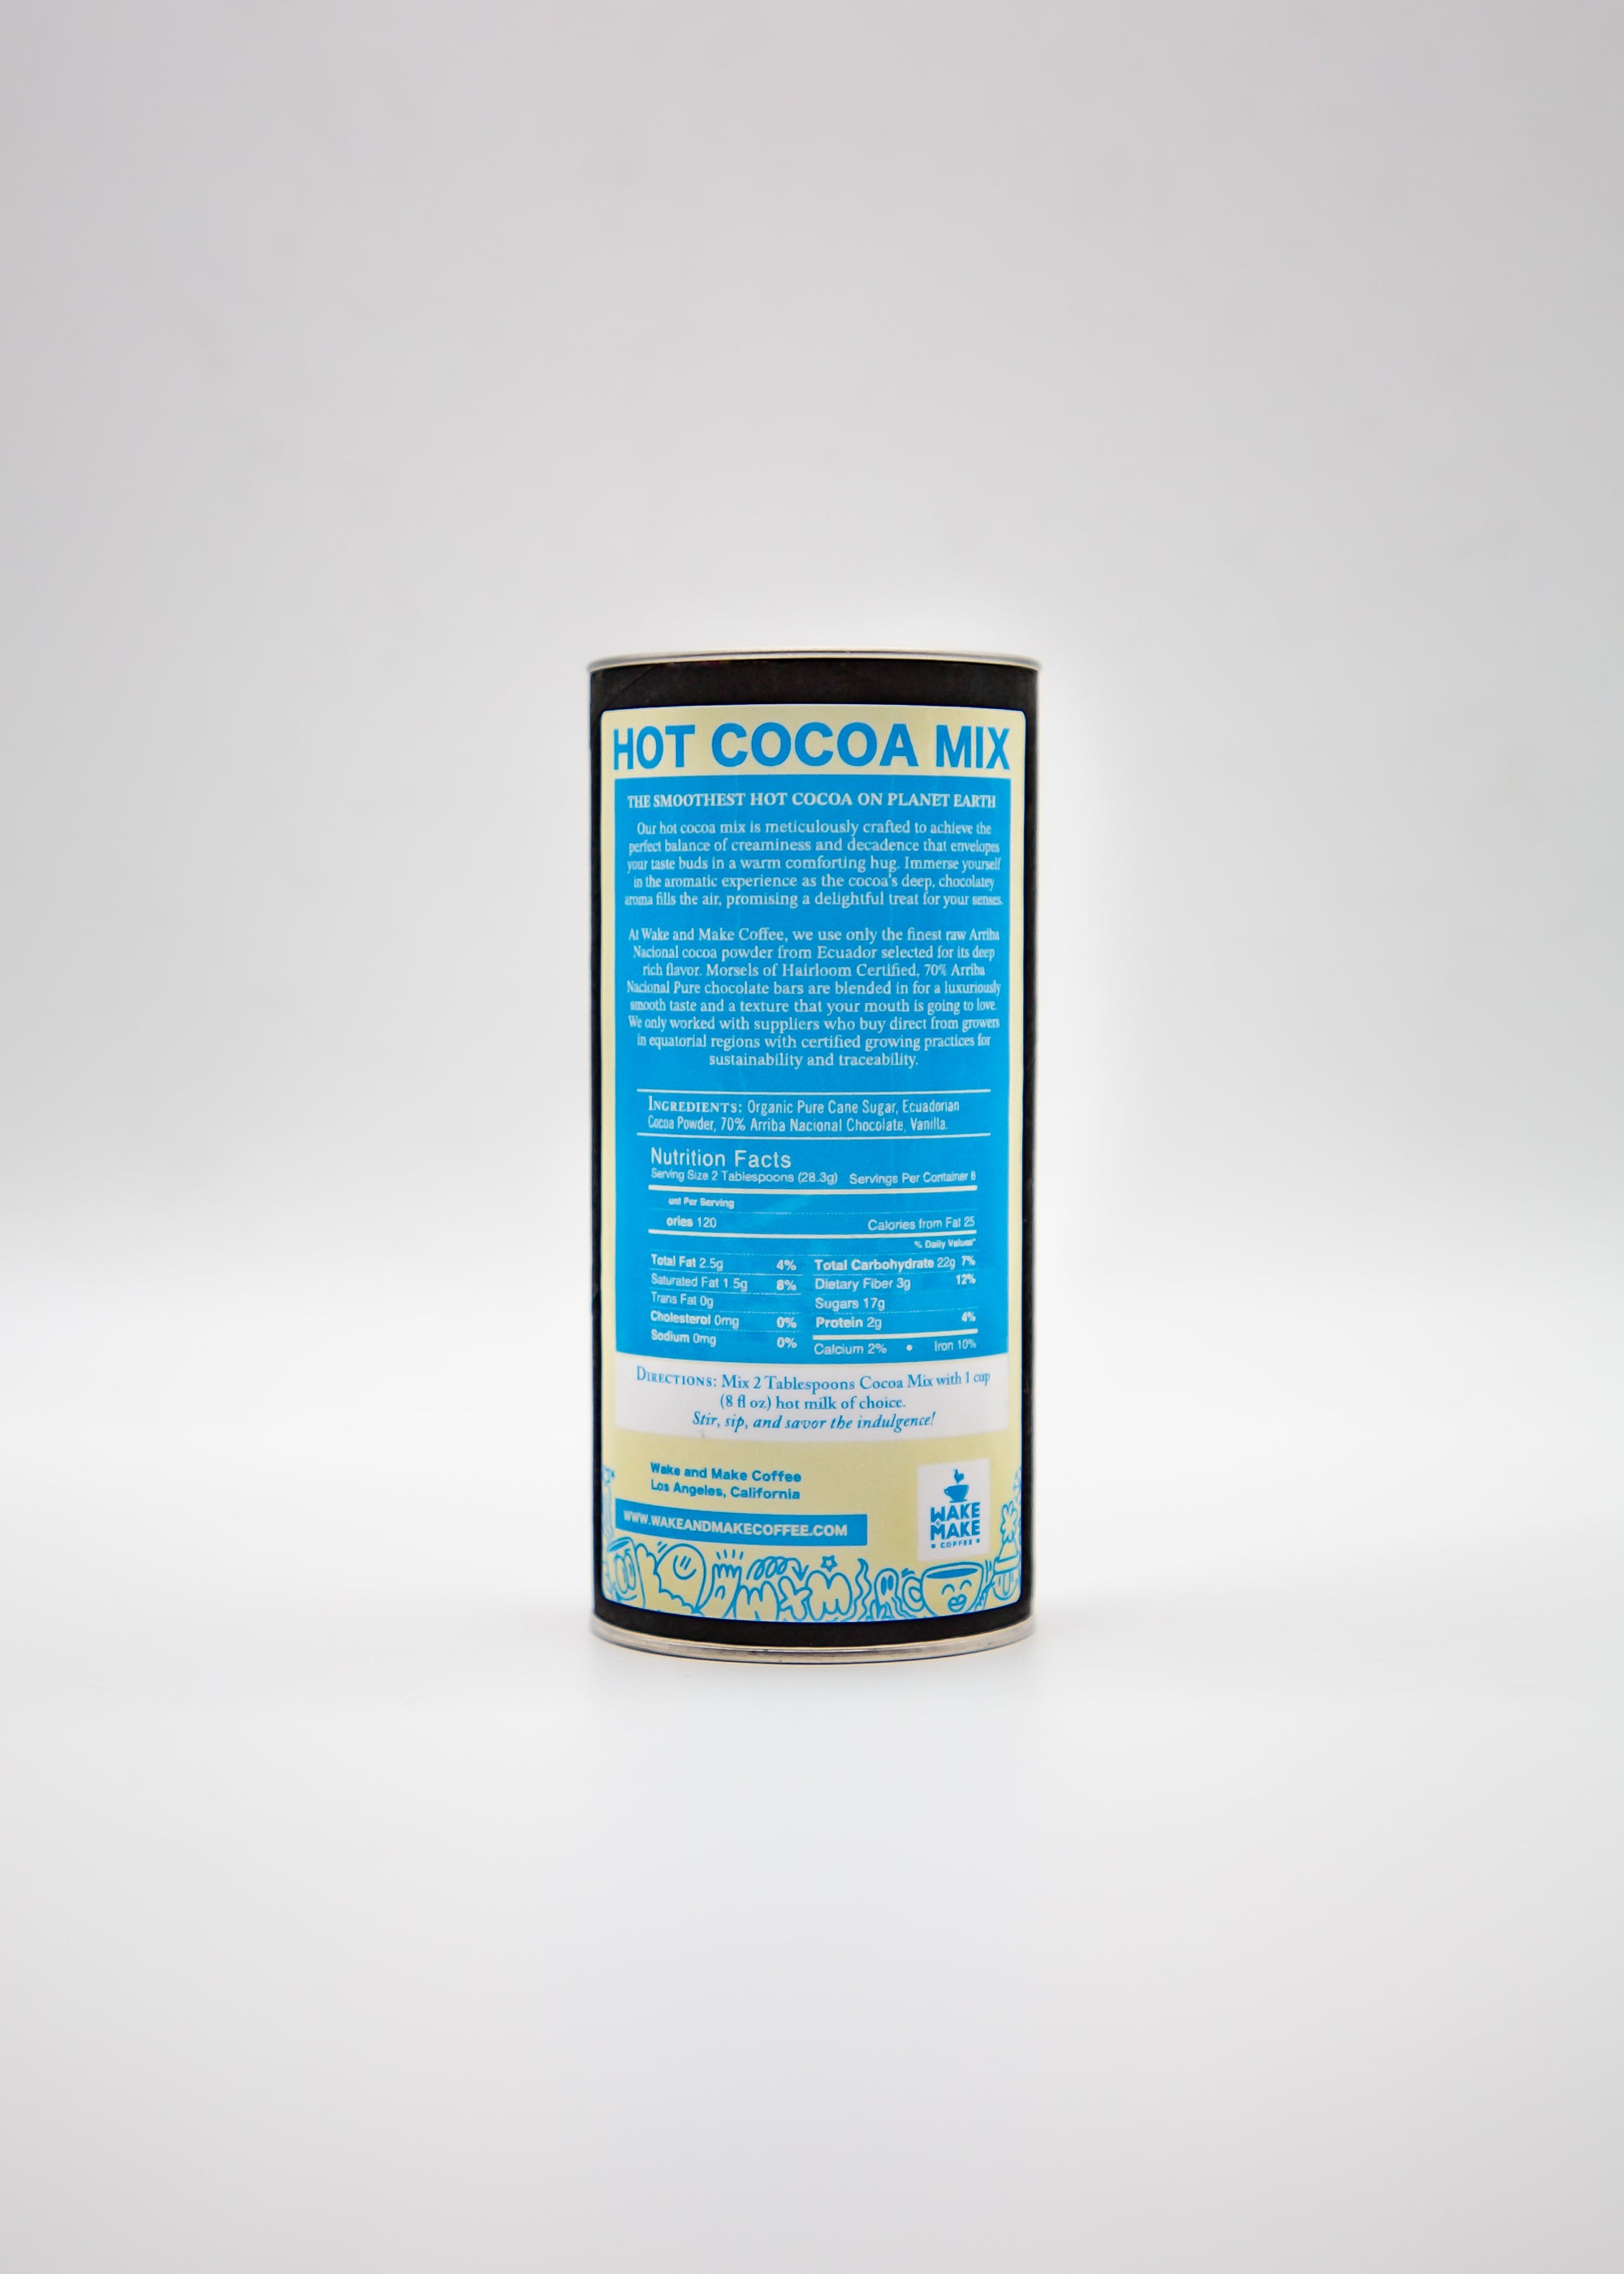 Pure Chocolate Hot Cocoa Mix 8oz (25% OFF)